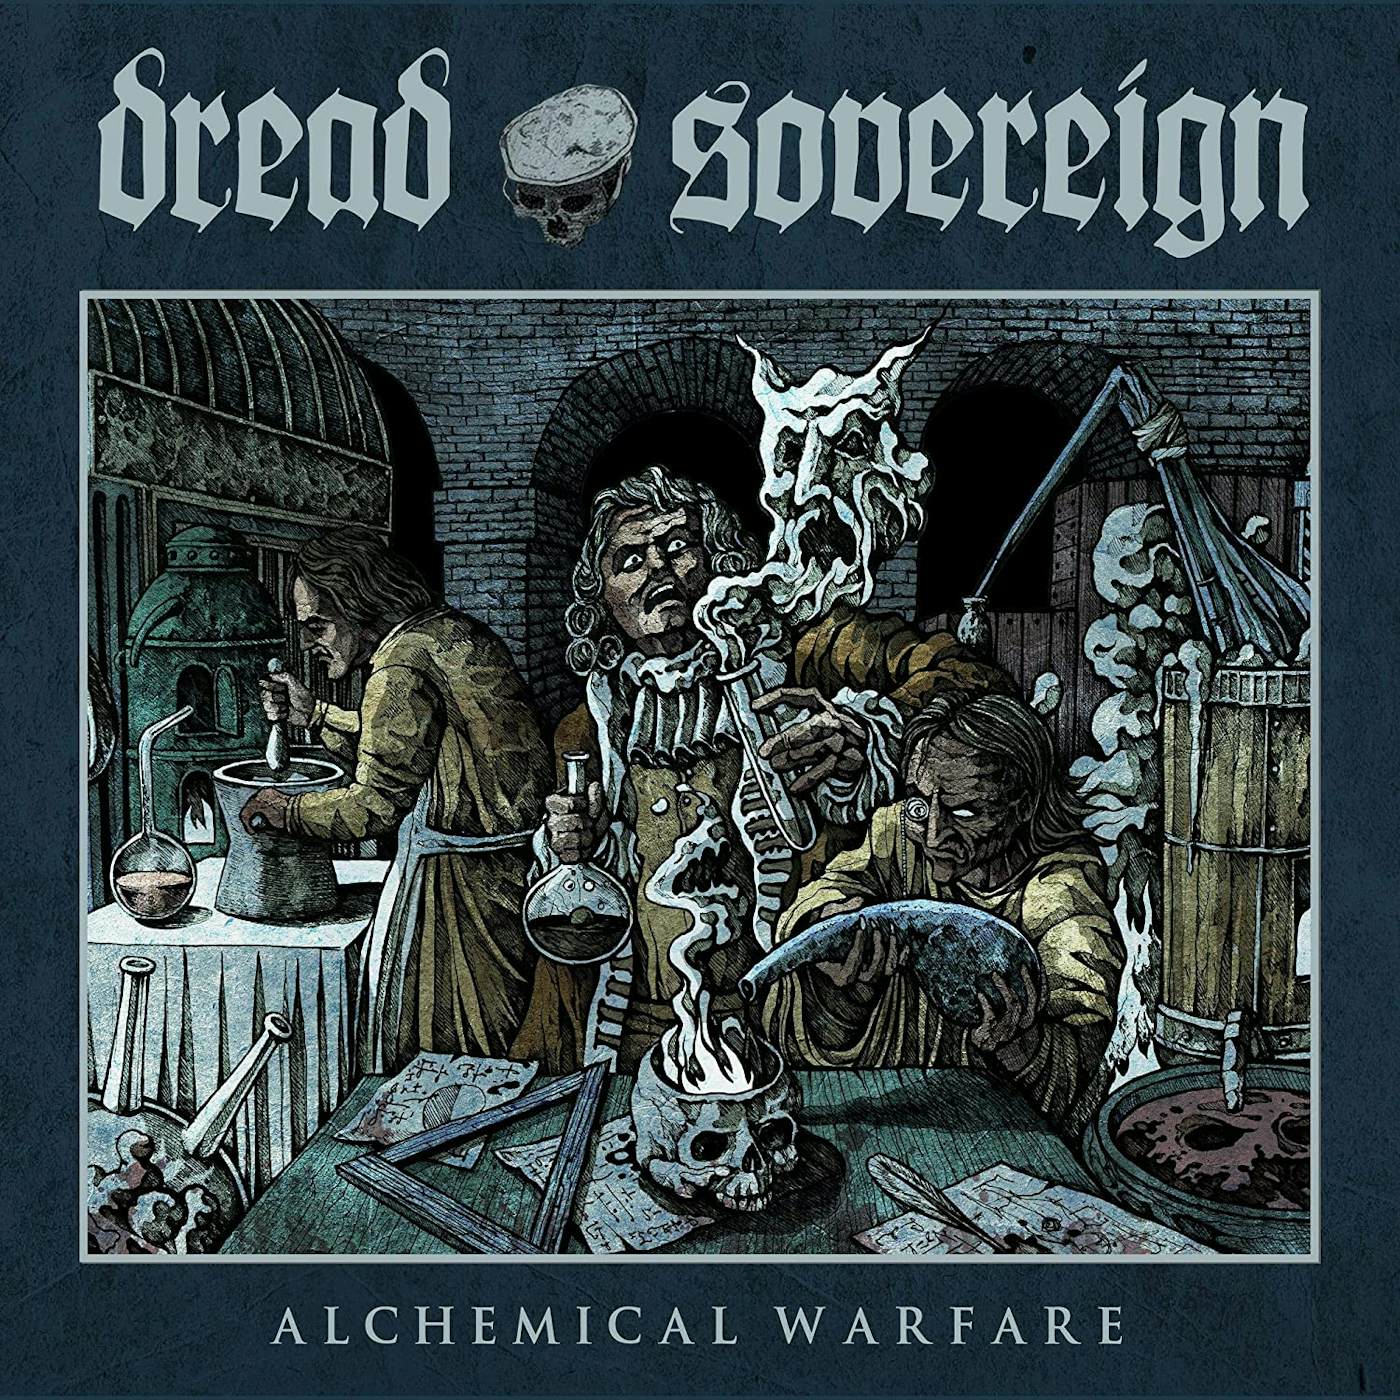 Dread Sovereign Alchemical Warfare CD